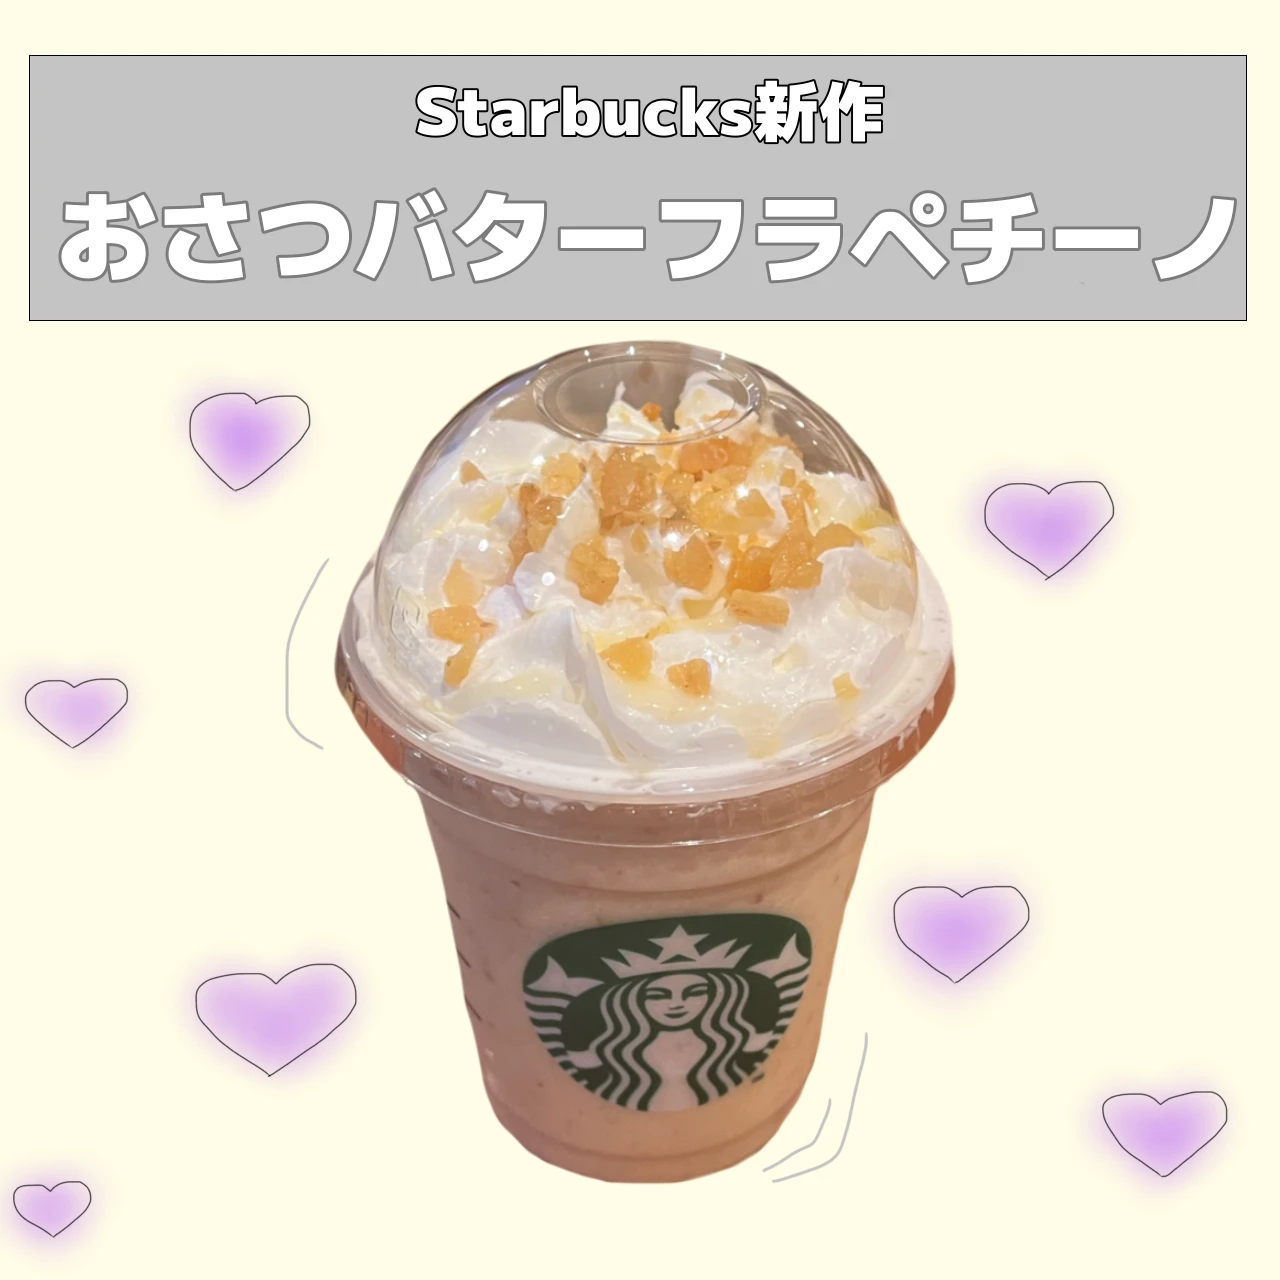 Starbucks新作のおさつバターフラペチーノの画像